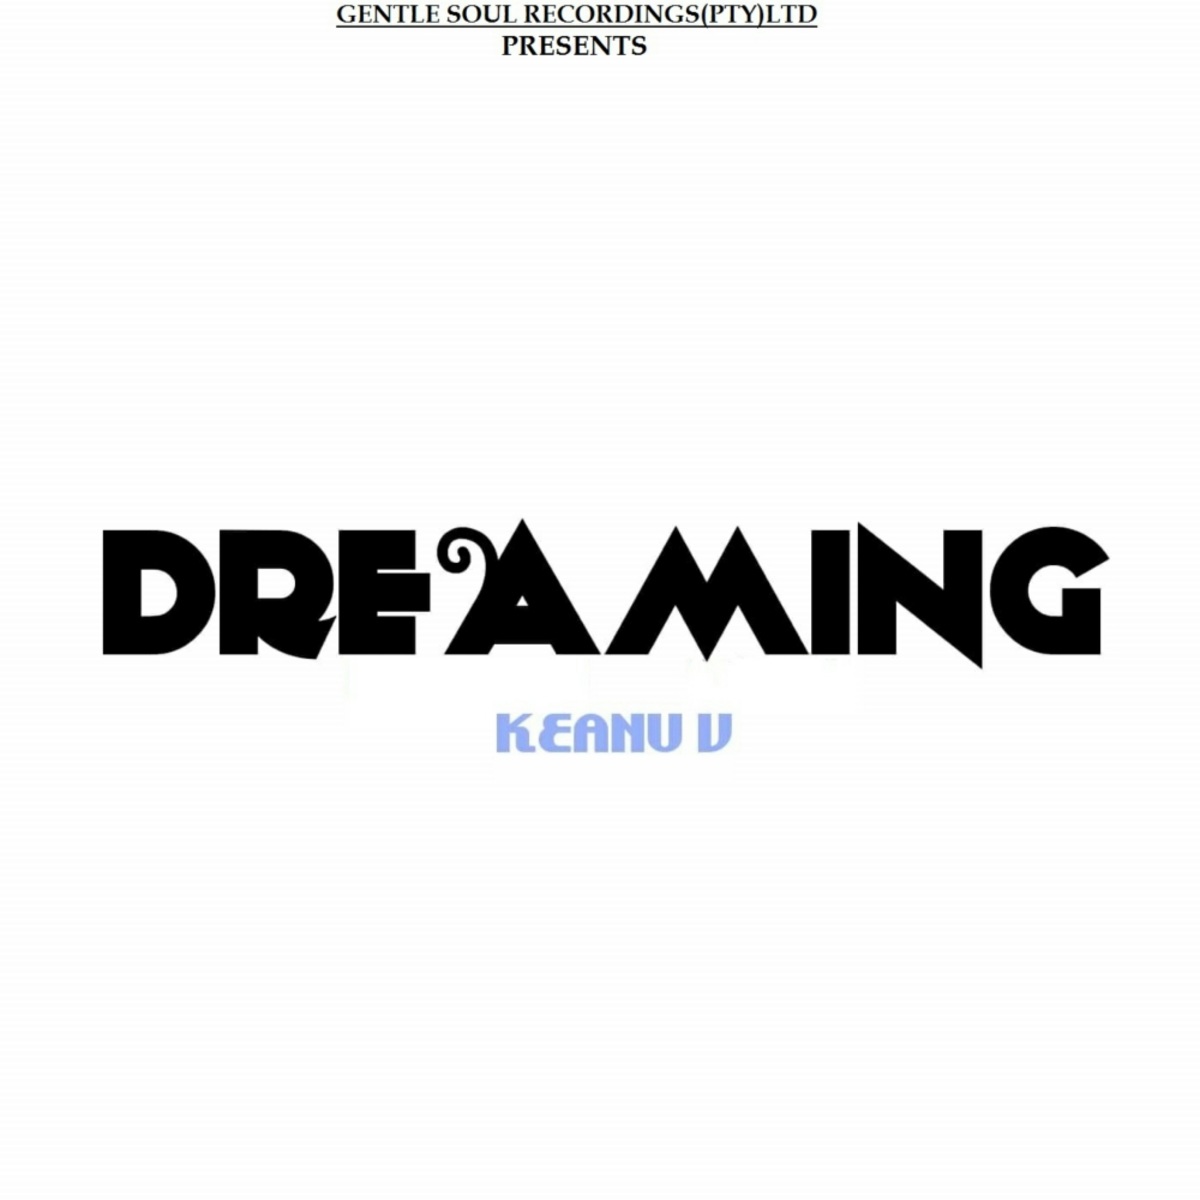 Keanu V Feat. Louw - Dreaming / Gentle Soul Records